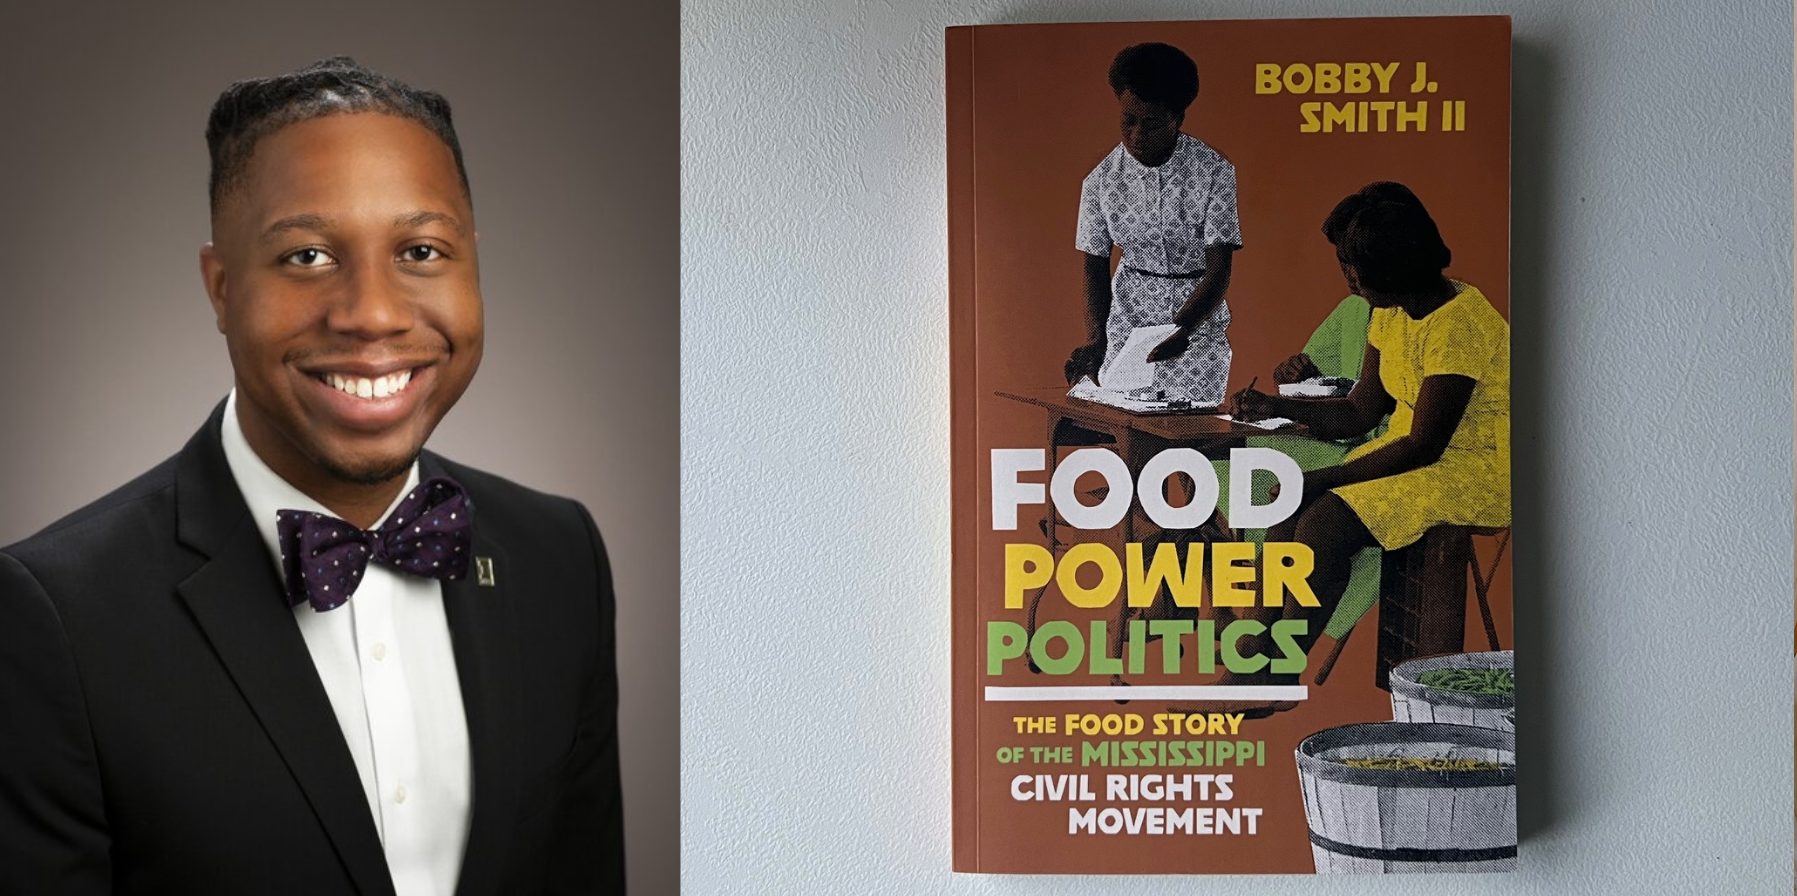 Dr. Bobby J. Smith II headshot beside his new book Food Power Politics.